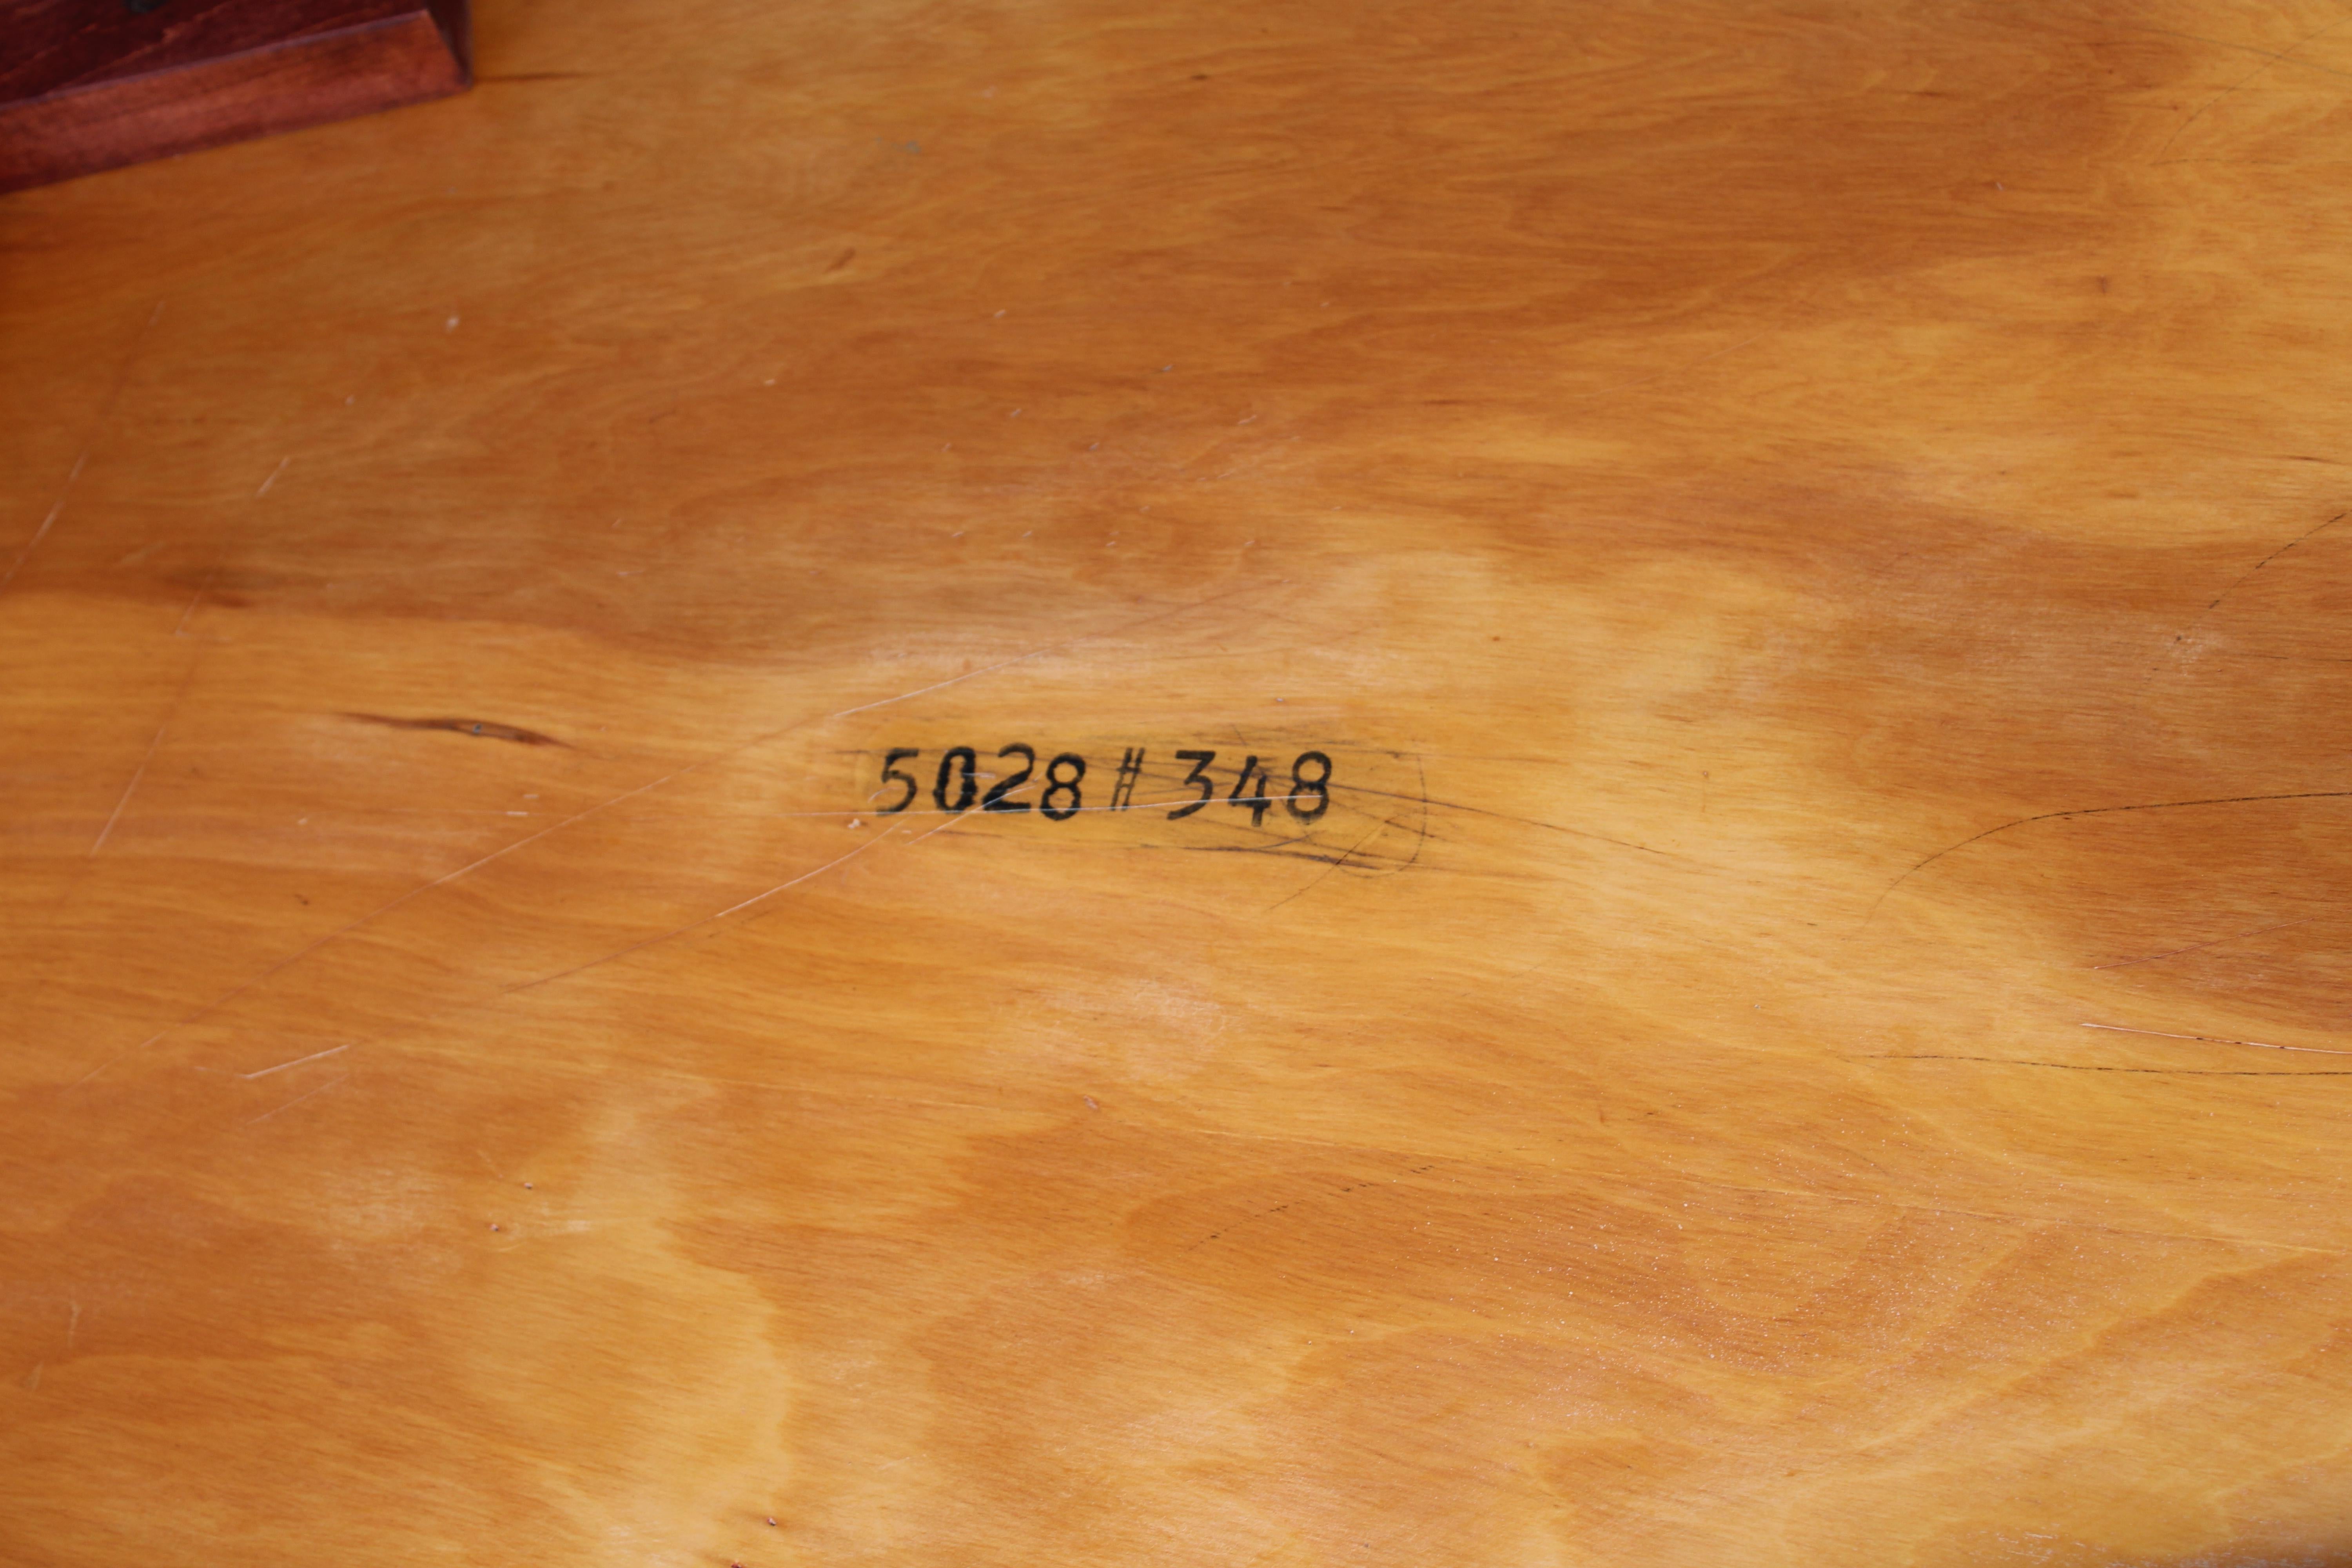 Mid-Century Modern Paul Frankl Cork Coffee Table, Bigfoot, Model 5028 # 348